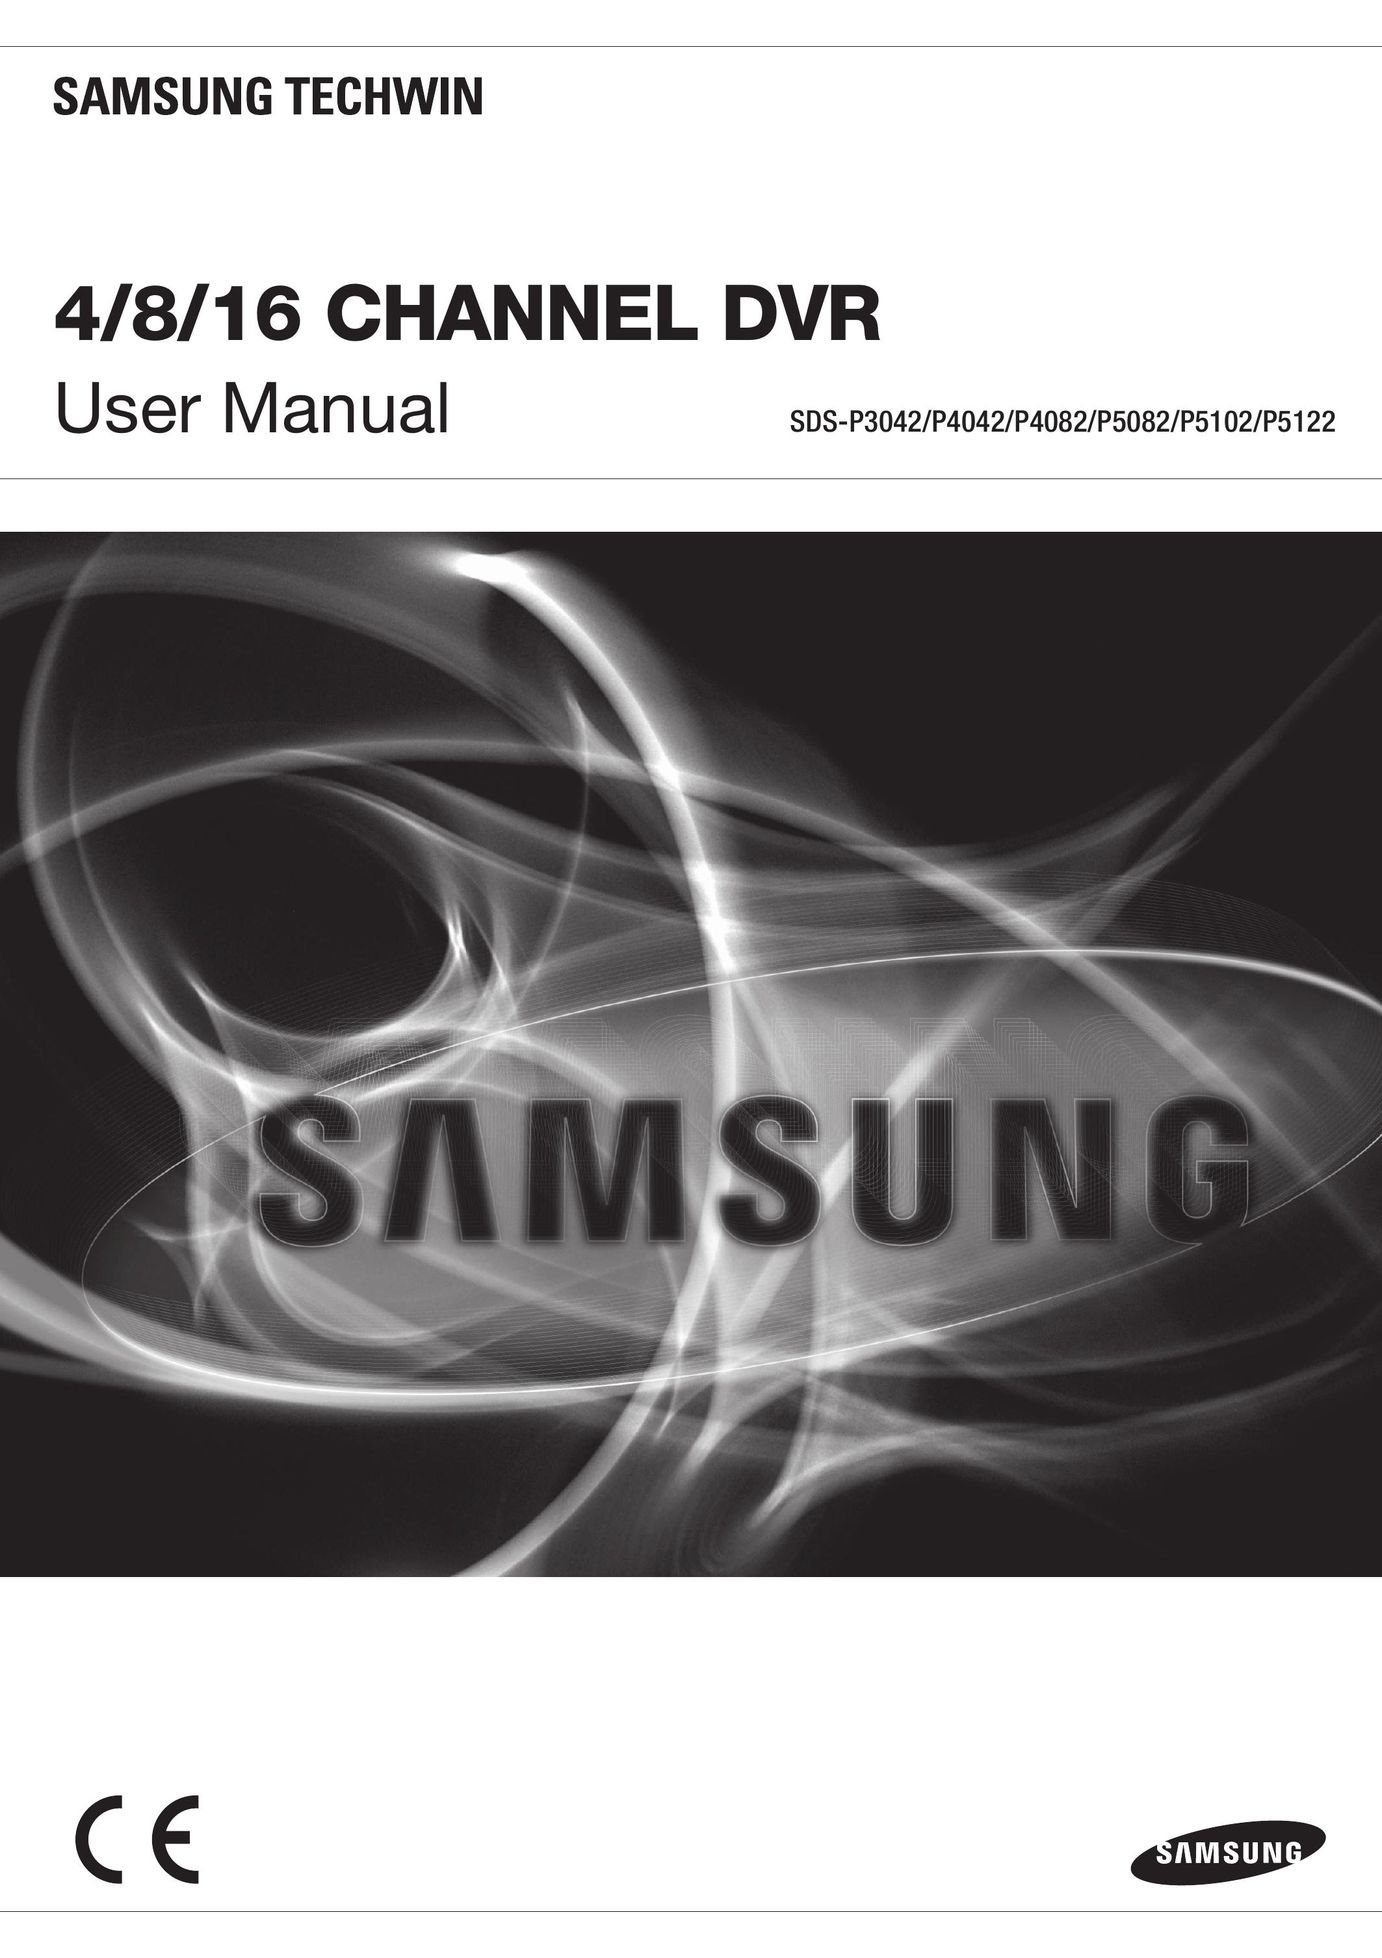 Samsung SDS-P3042 DVR User Manual